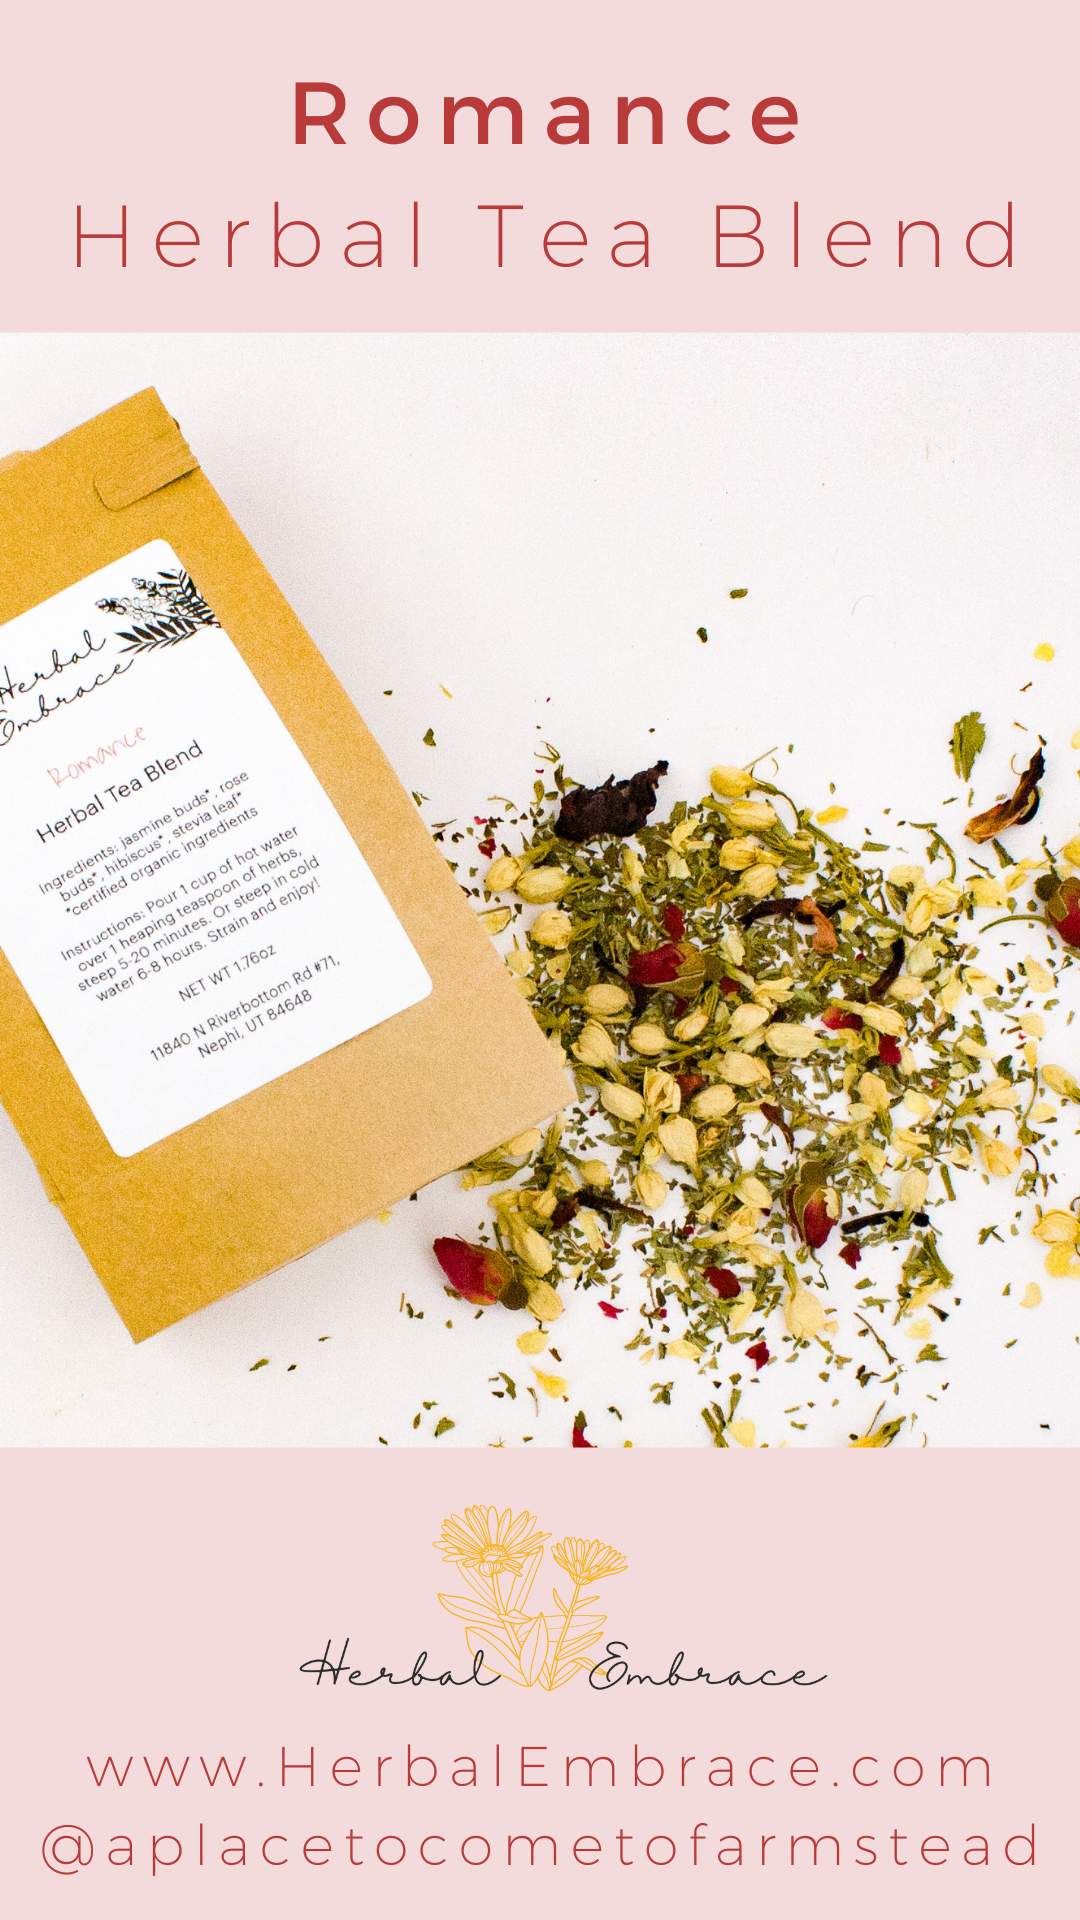 Jasmine & Rose Herbal Loose-Leaf Tea Blend (formerly known as Romance)